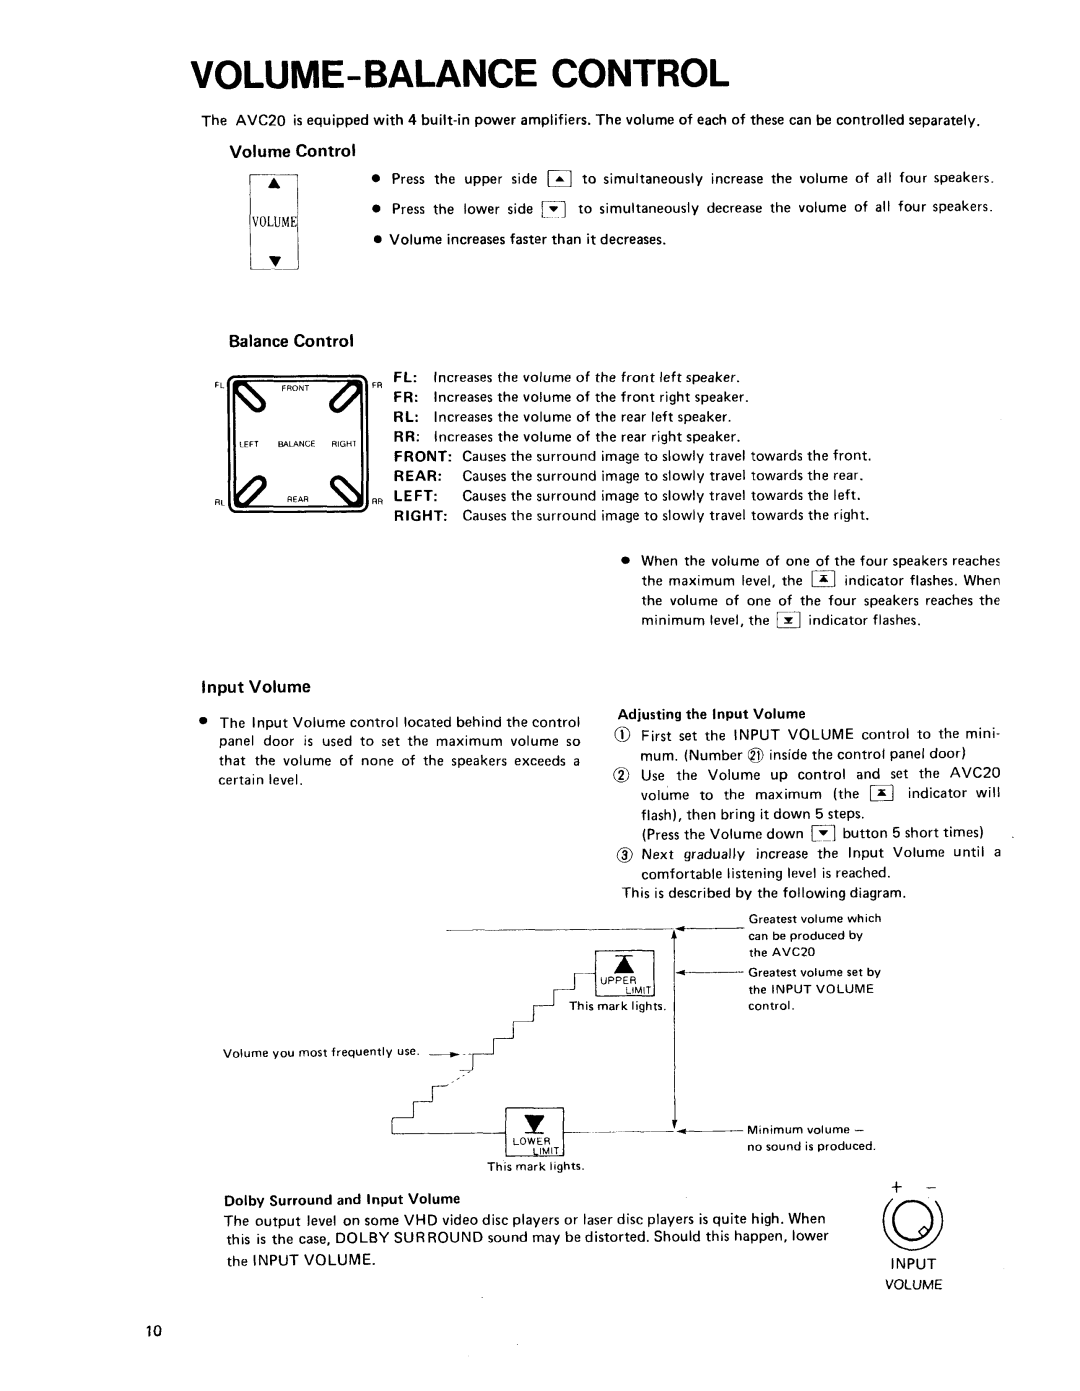 Shure AVC20 owner manual Volume-Balancecontrol, Volume Control, Balance Control, lnput Volume 